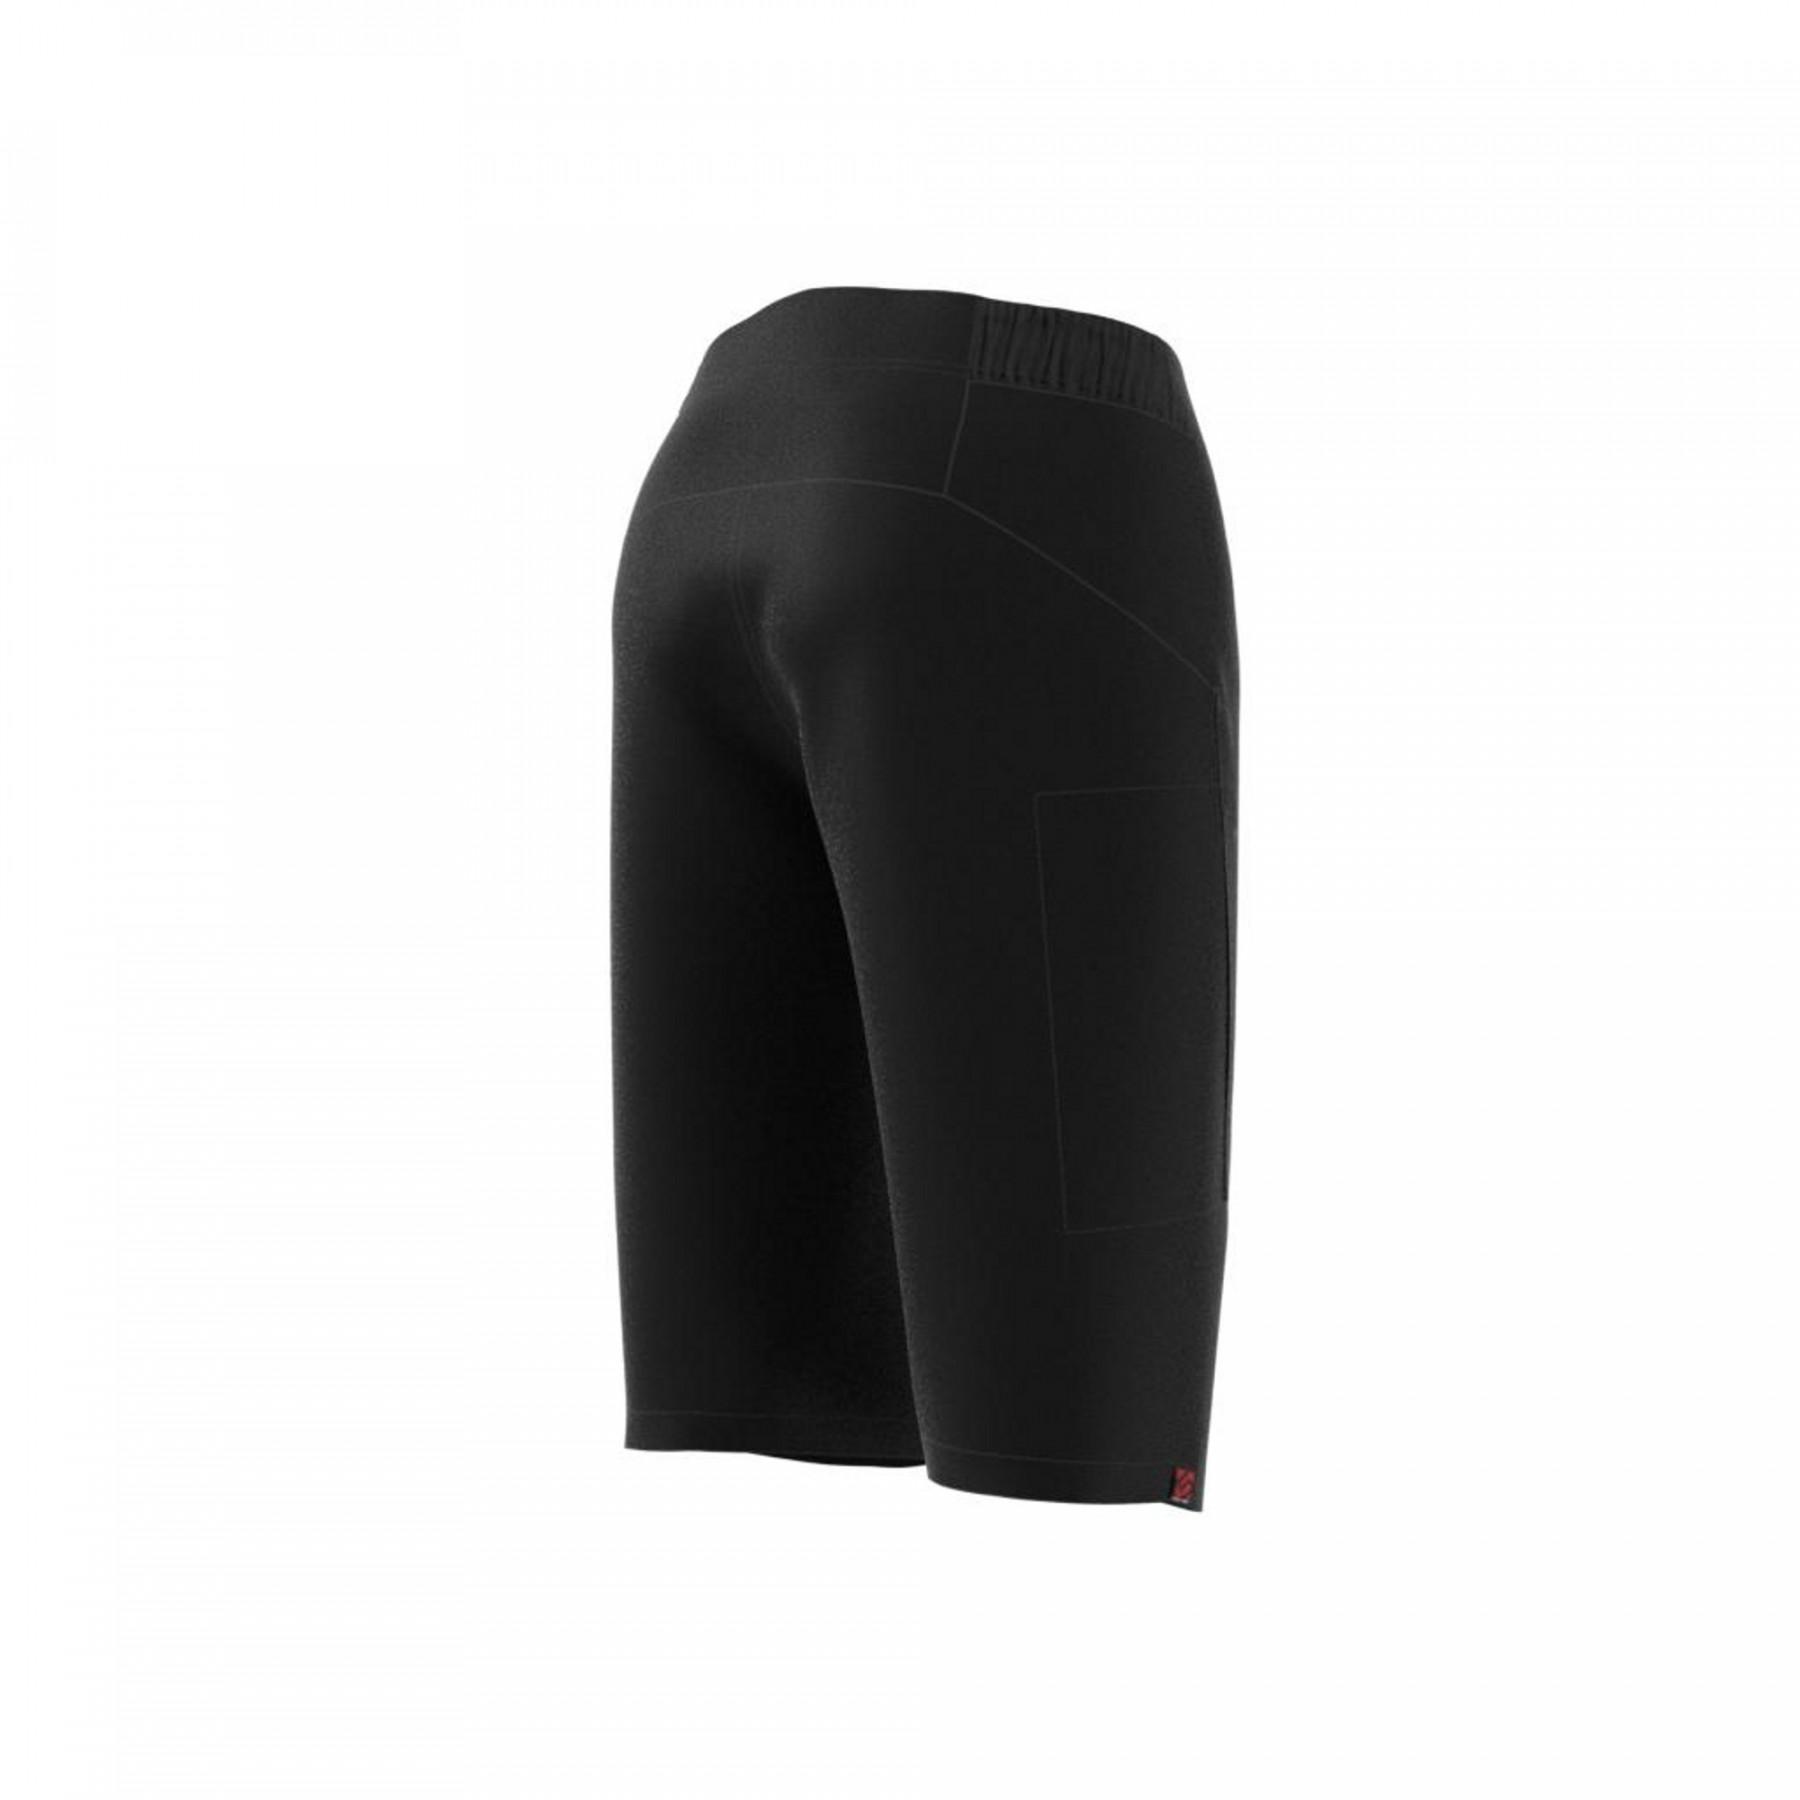 Damen-Bermuda-Shorts adidas 5.10 TrailX